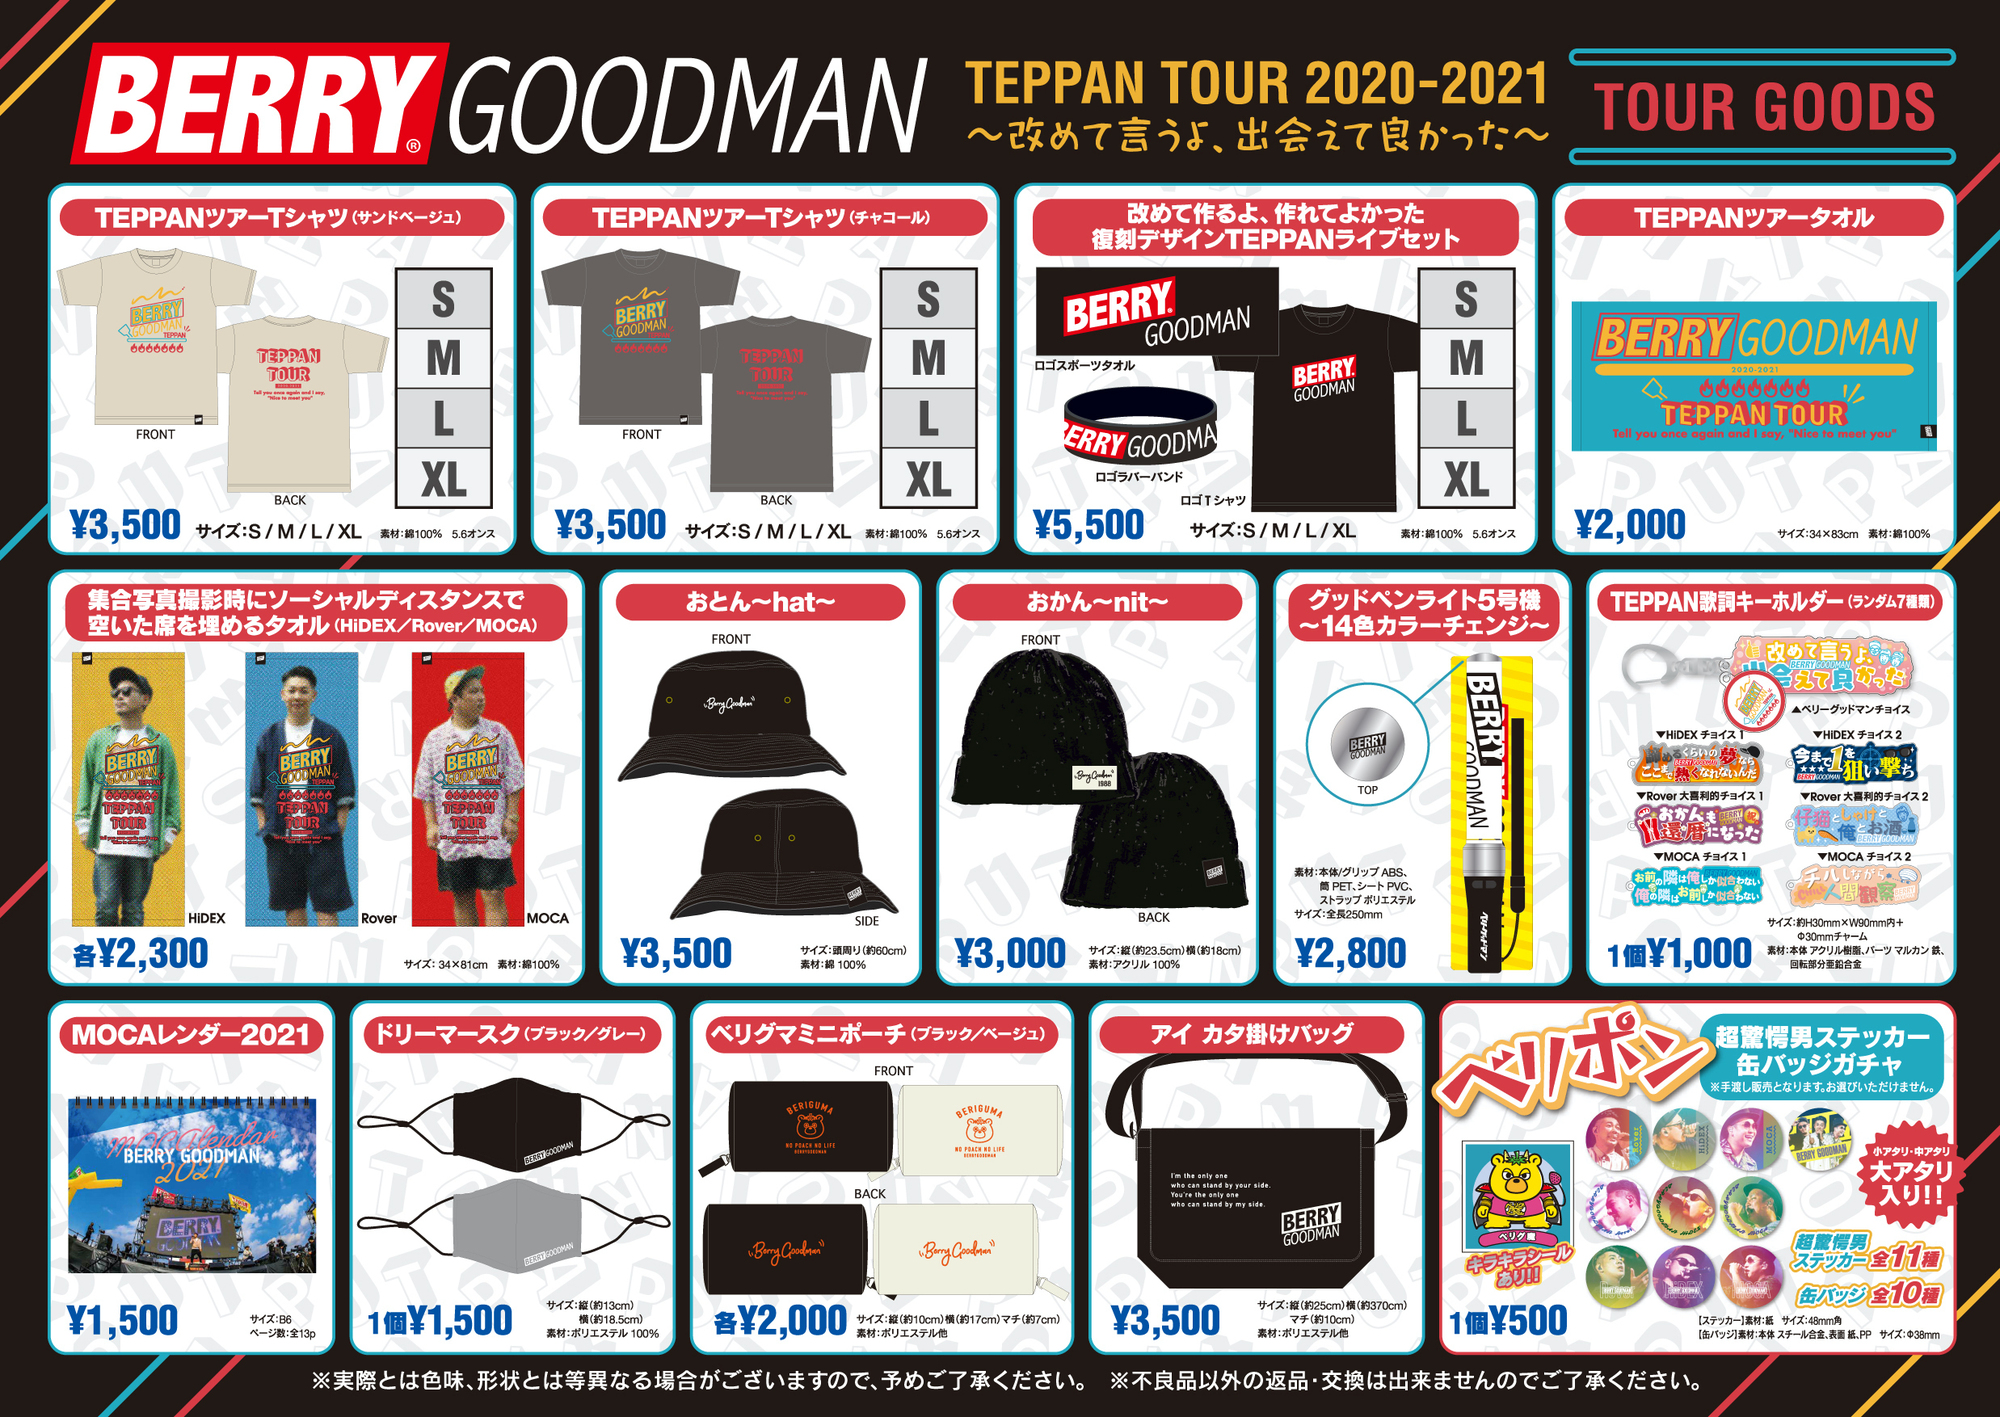 Goods ベリーグッドマン Teppan Tour 21 改めていうよ 出会えて良かった グッズ販売決定 Berry Goodman Official Website